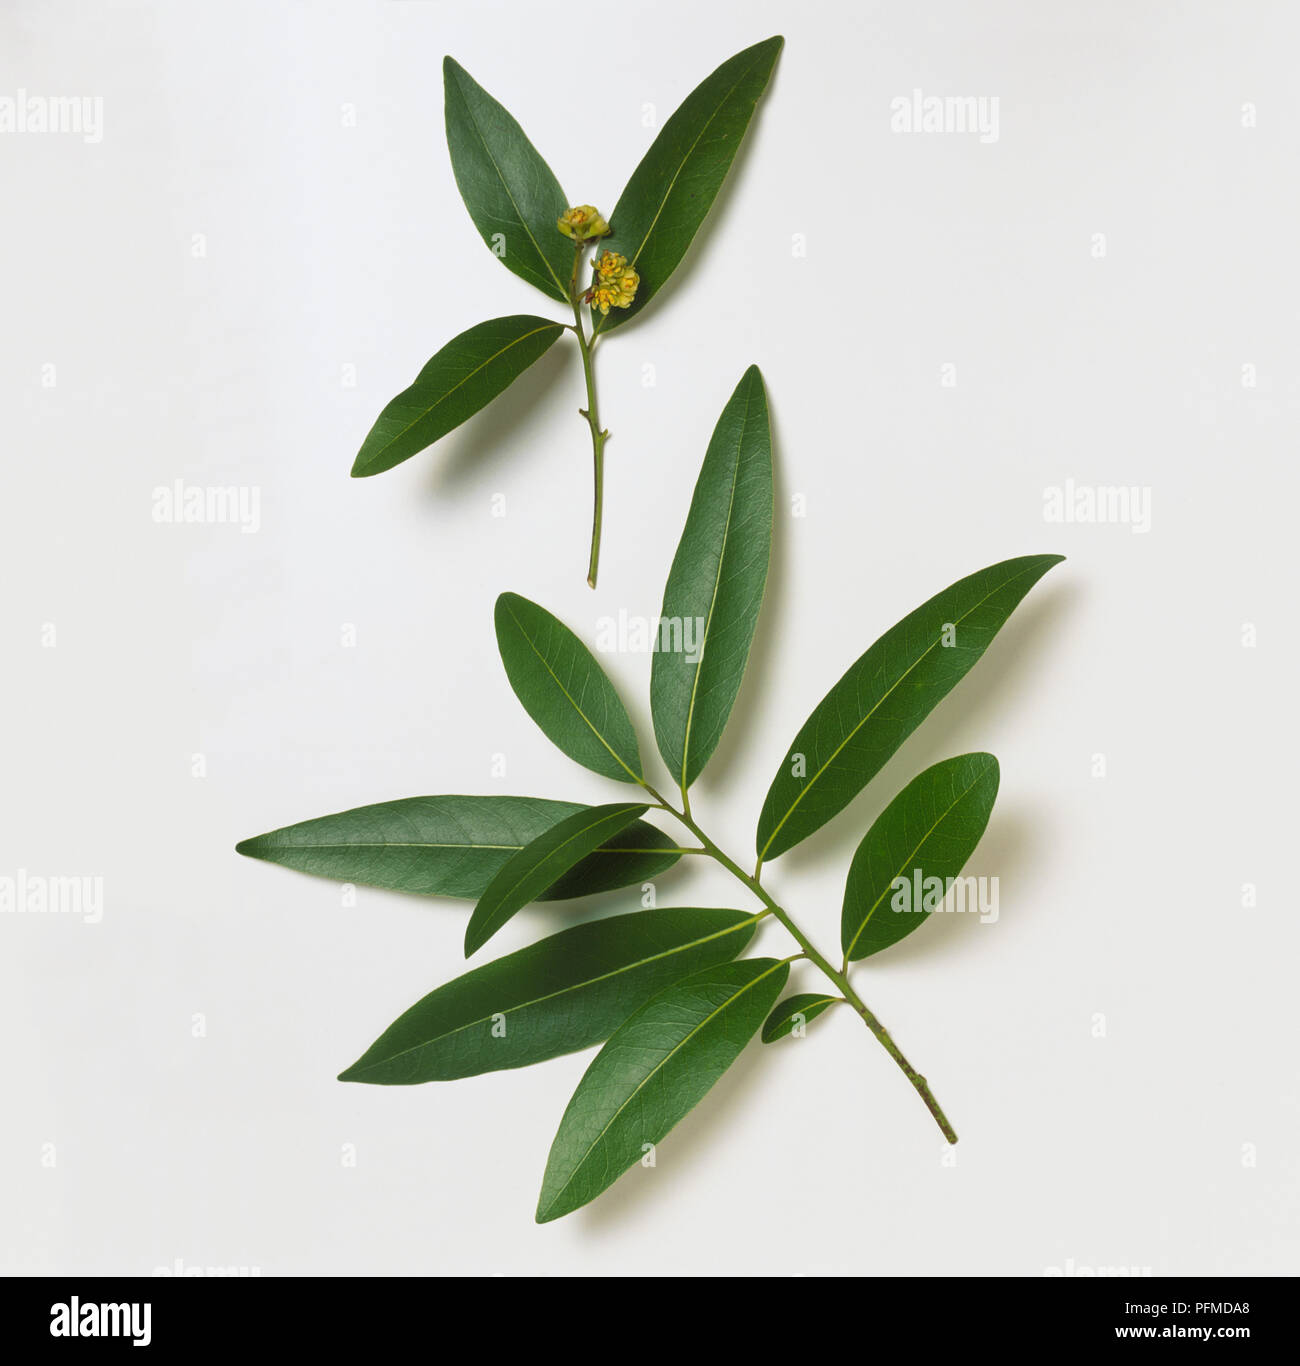 Umbellularia californica, California Laurel of Headache Tree leaves and flowers. Stock Photo